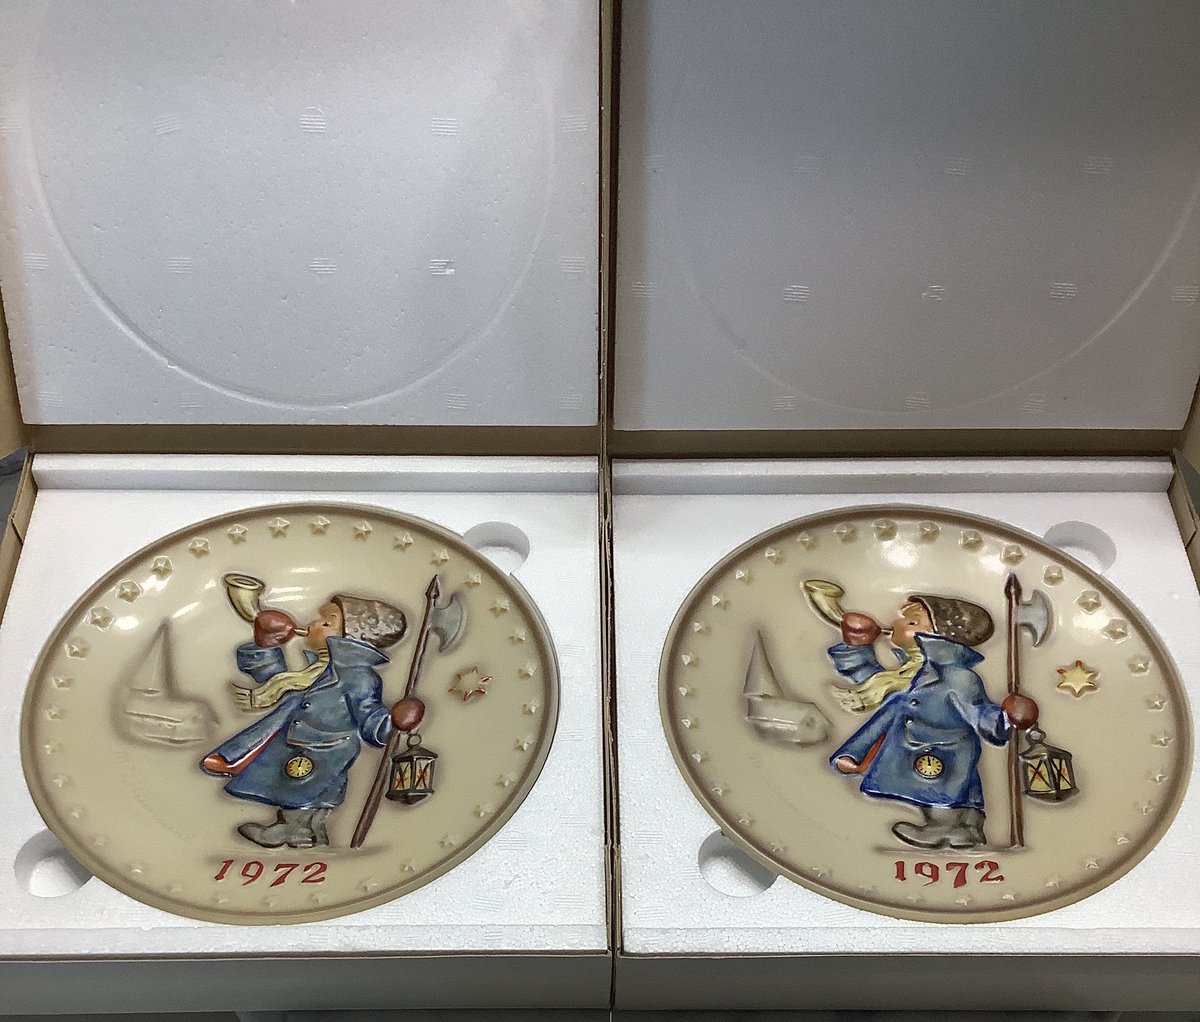 50% off vintage collectible Hummel plates by Goebel       bmktreasures.etsy.com/listing/111972…  
#etsy #etsyvintageshop #holidays #smallbusiness #etsyshopownersofinstagram #smallbusinessowner #vintagefinds #collectibles #giftideas #homedecor #plates #sale #clearancefinds #hummel #goebel